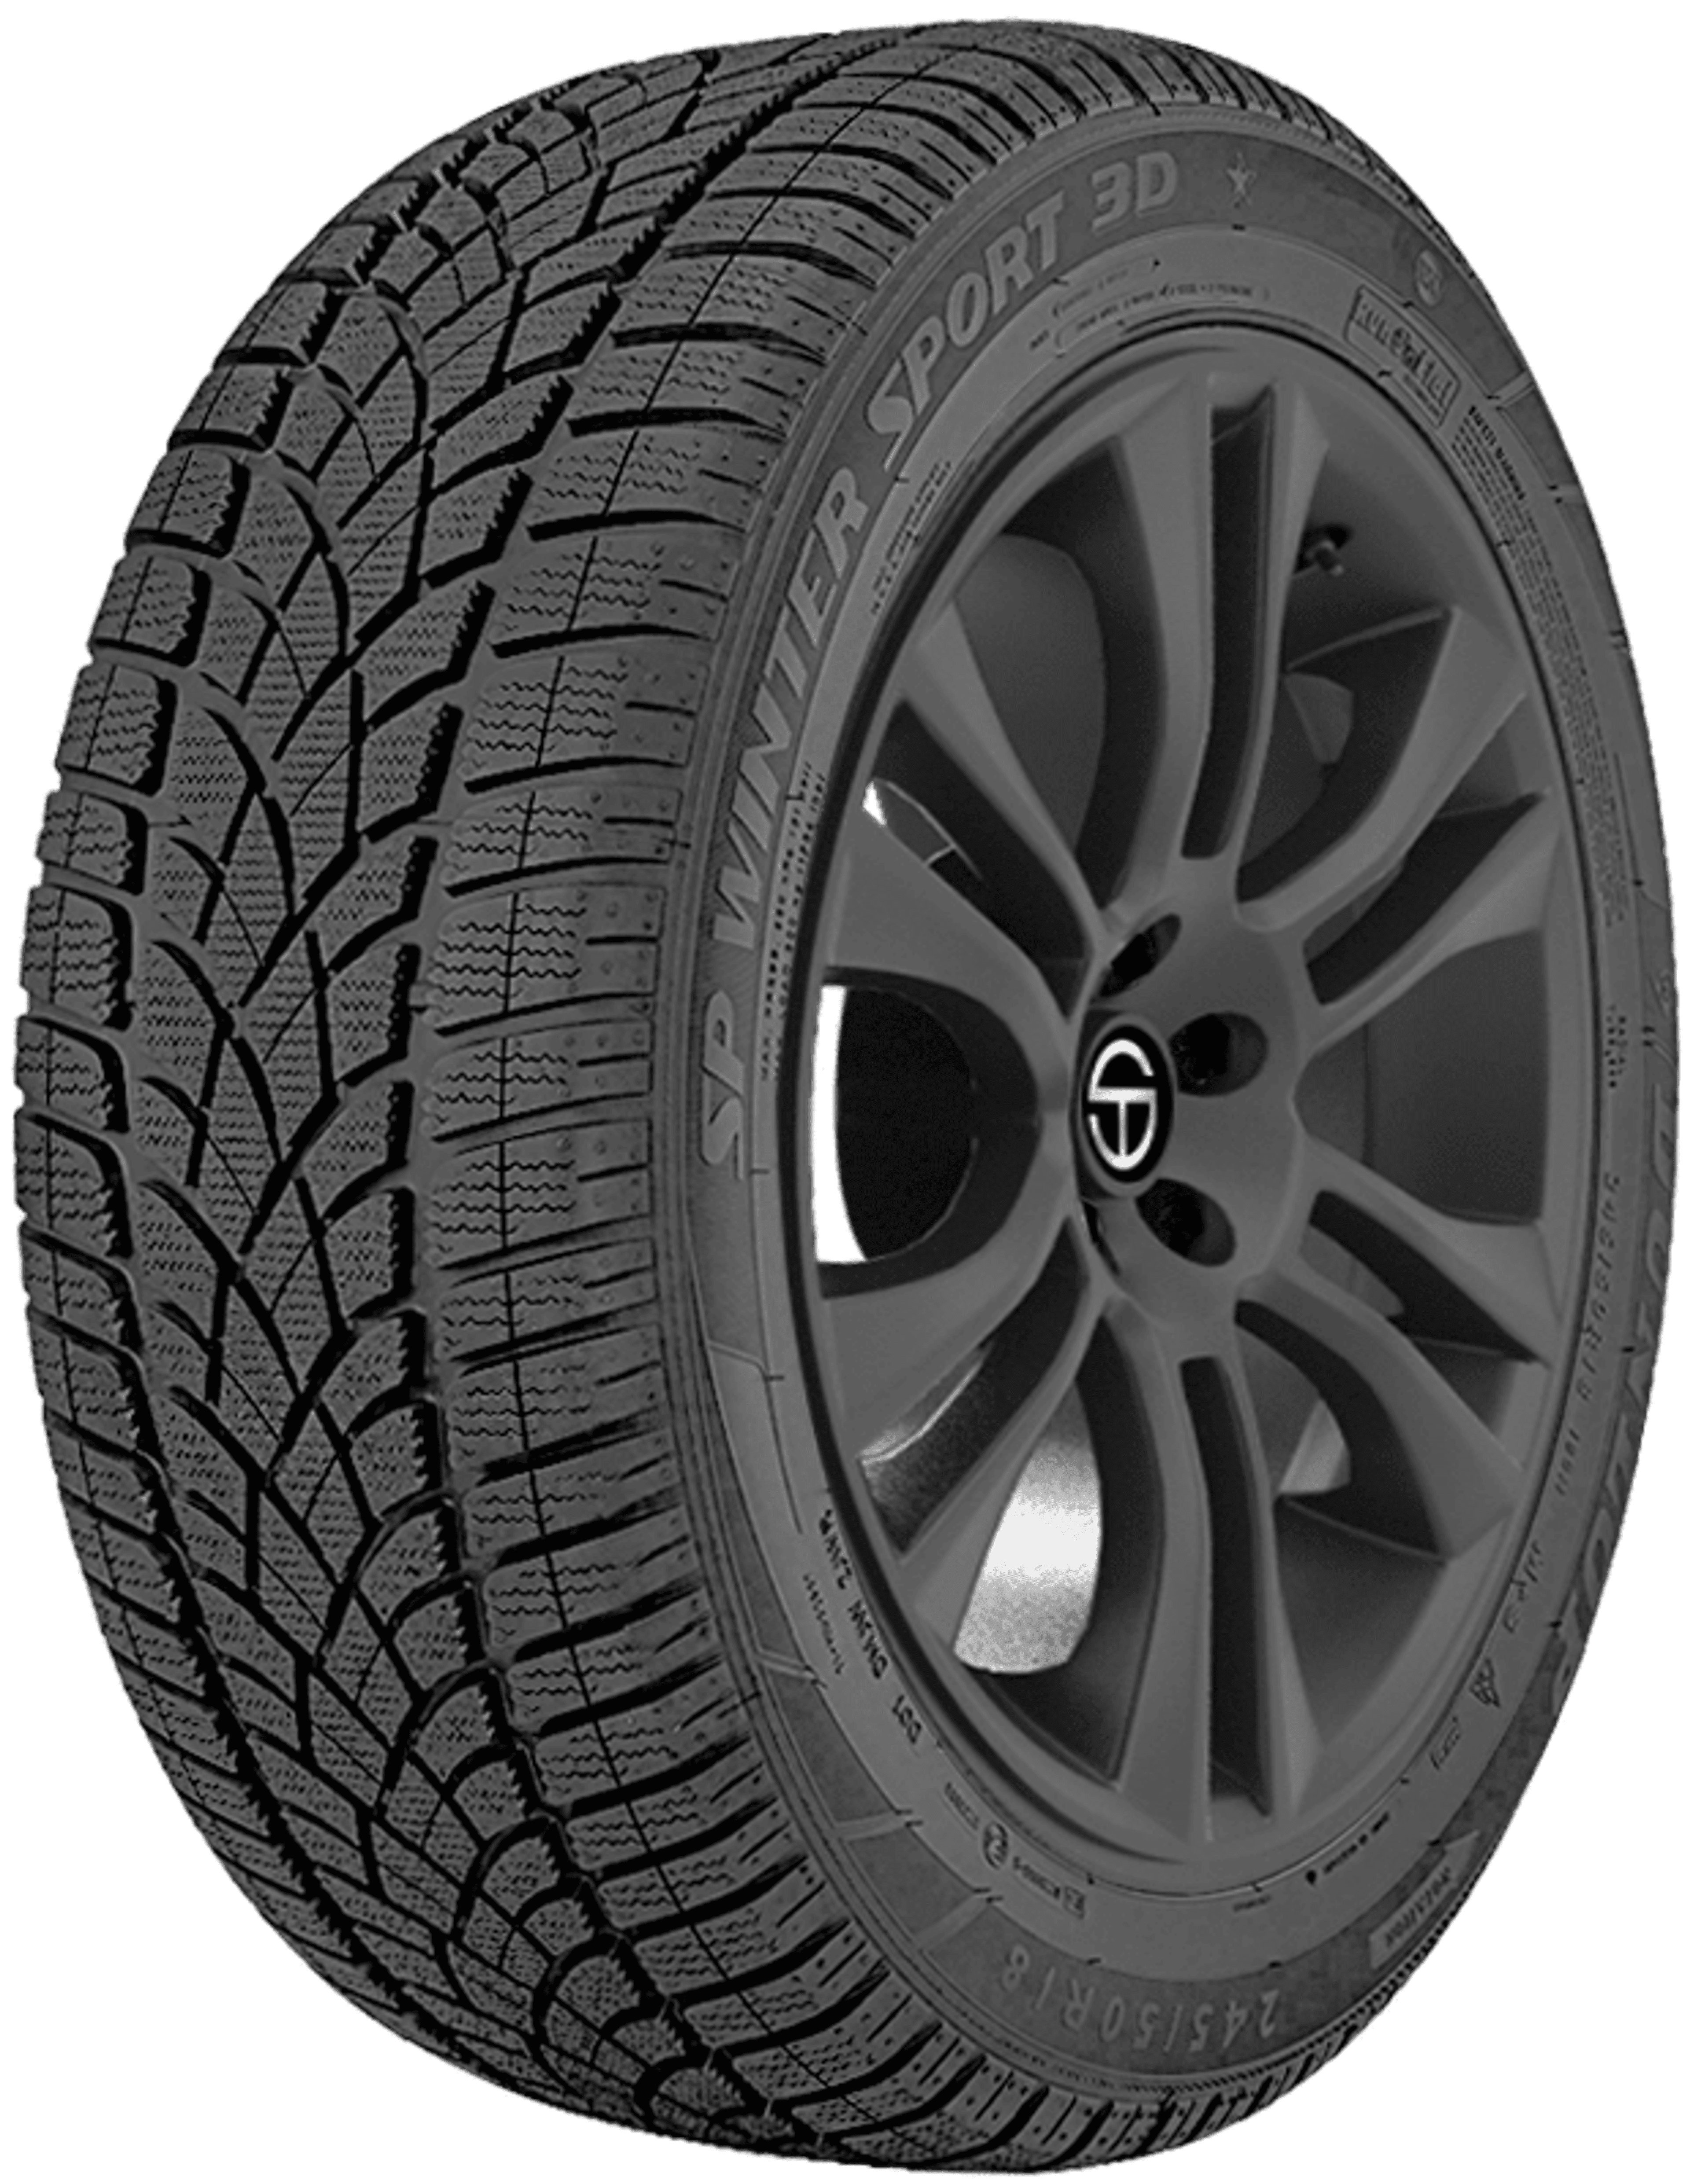 Tires SP SimpleTire | Dunlop Winter Buy Sport 3D Online